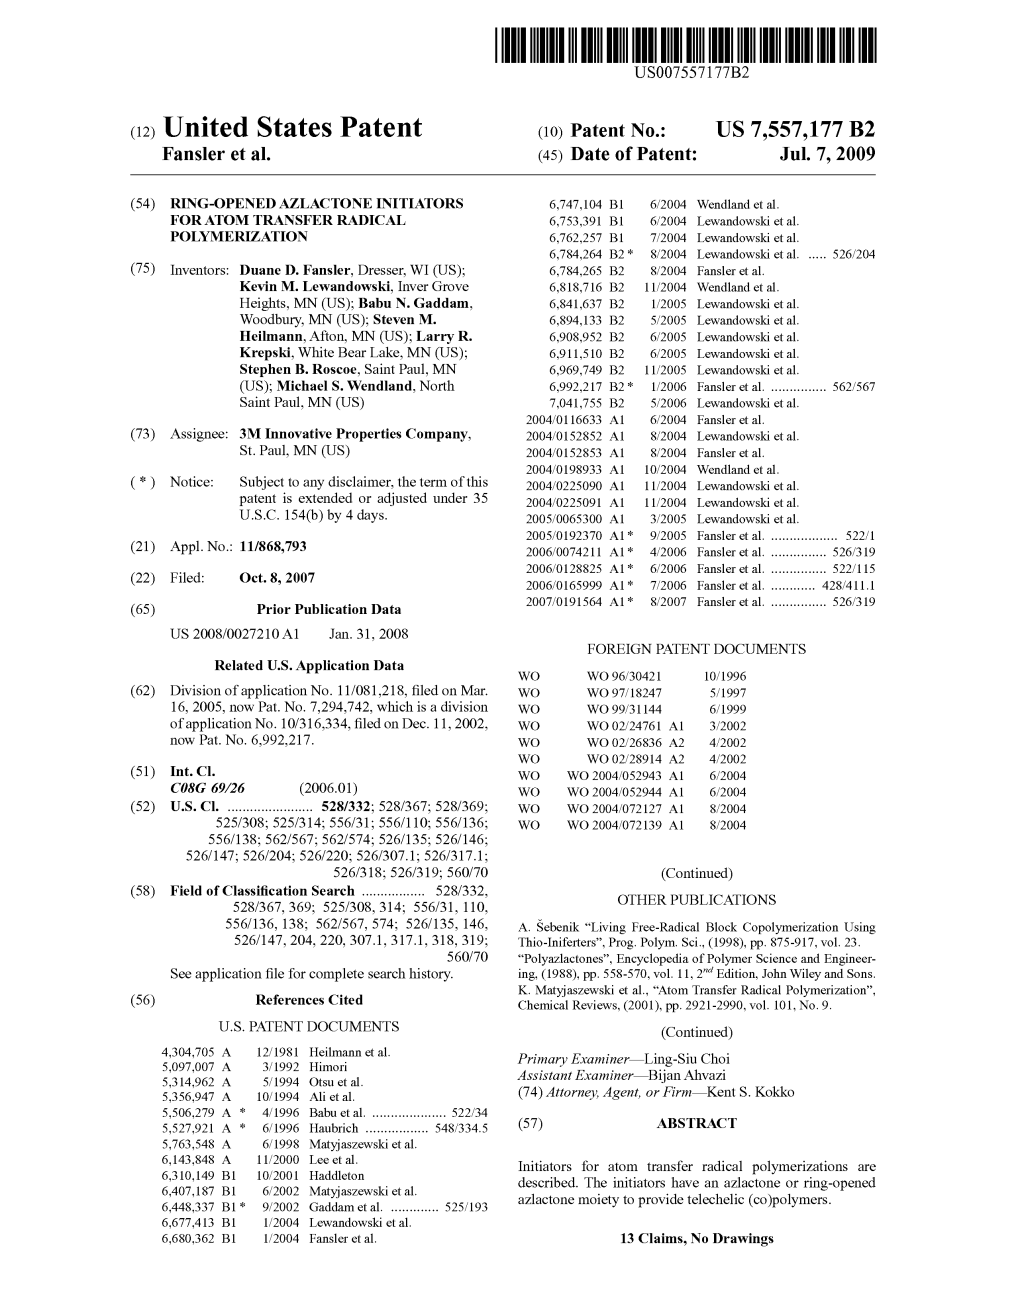 (12) United States Patent (10) Patent No.: US 7,557,177 B2 Fansler Et Al